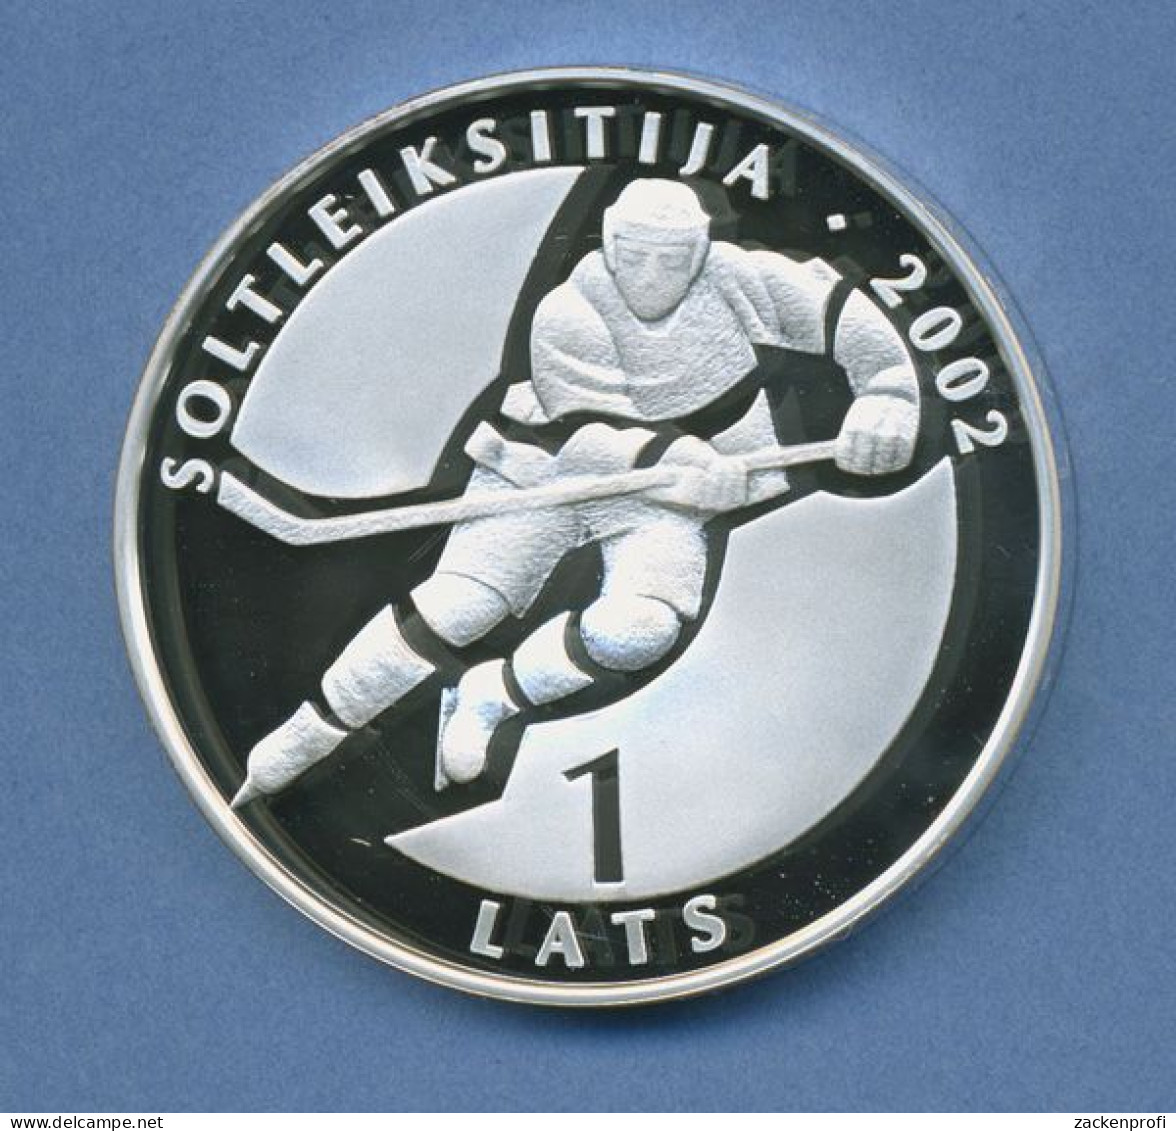 Lettland 1 Lats 2001, Silber, Eishockey, KM 50 PP (m4227) - Lettonia